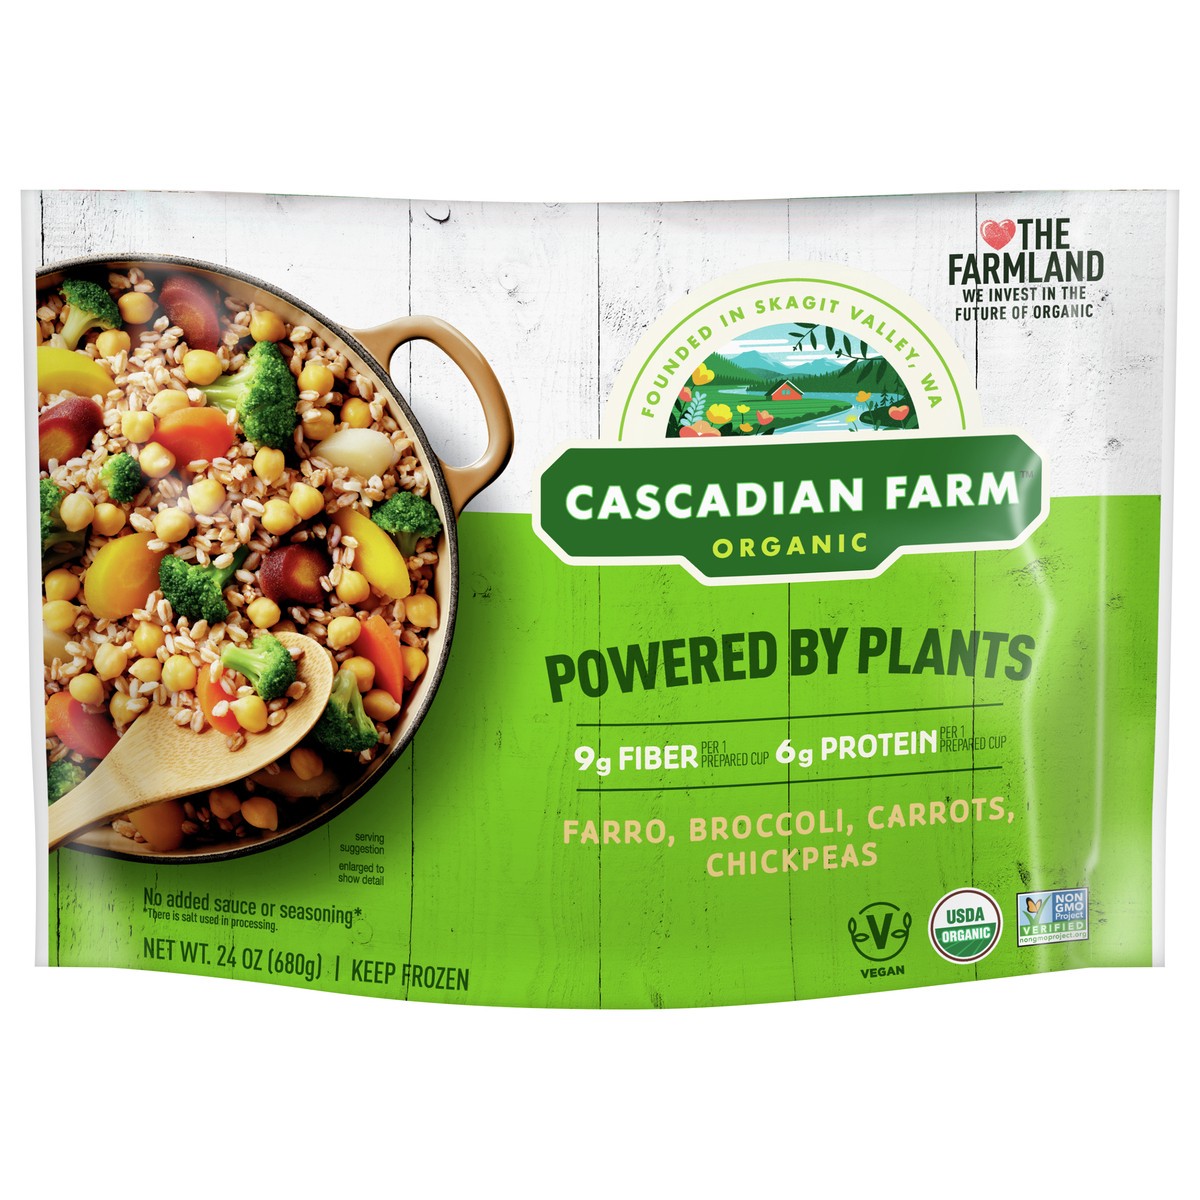 slide 1 of 9, Cascadian Farm Organic Powered By Plants Frozen Vegetables – Farro, Broccoli, Carrots, Chickpeas, 24 oz., 24 oz